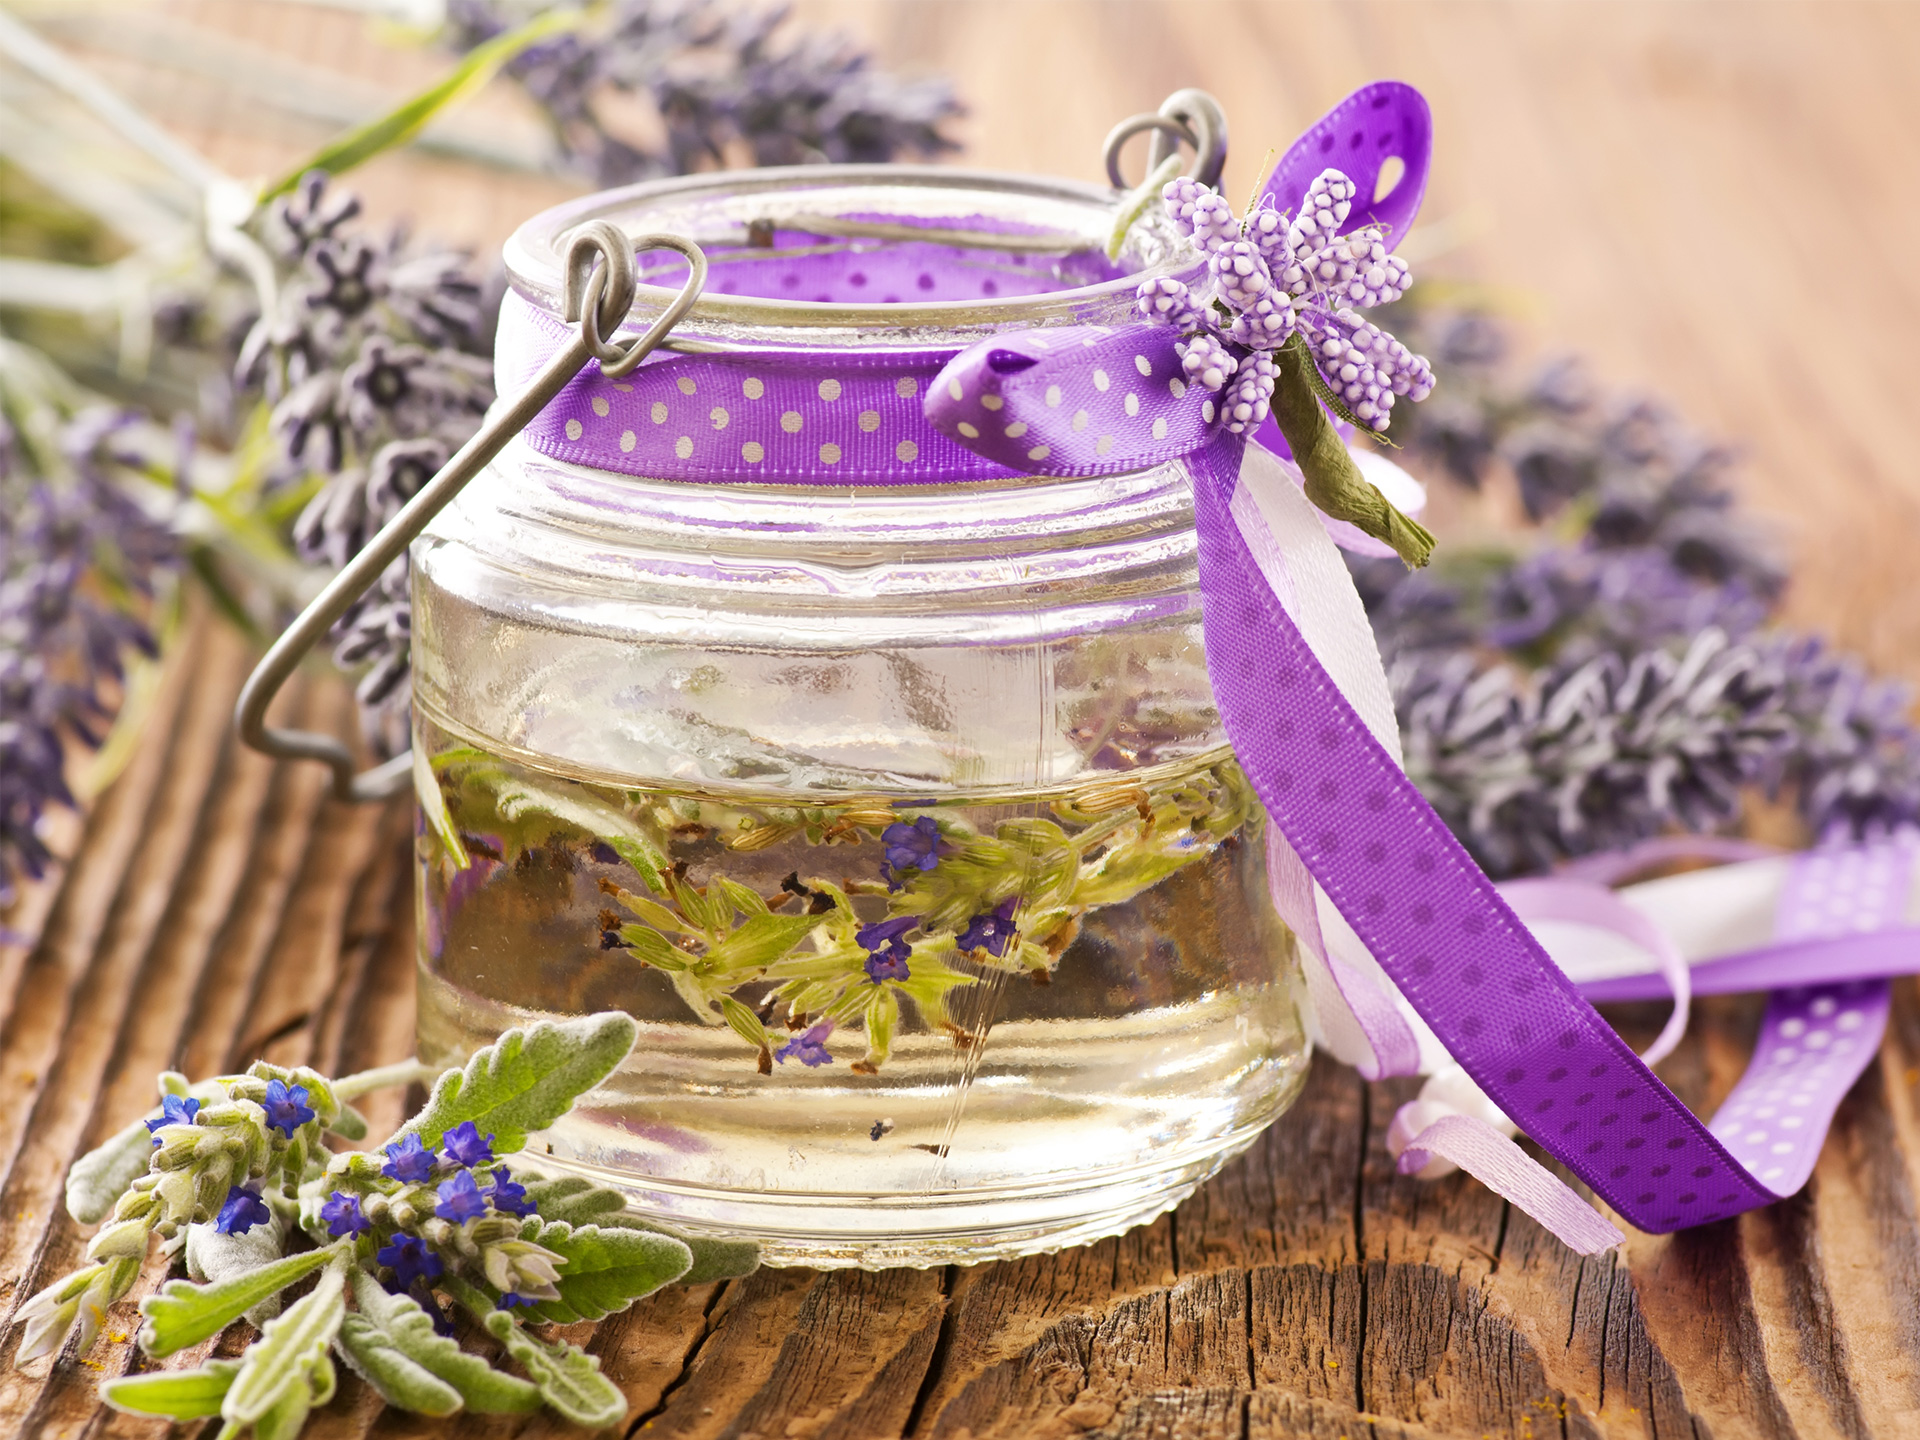 Lavender Oil Benefits